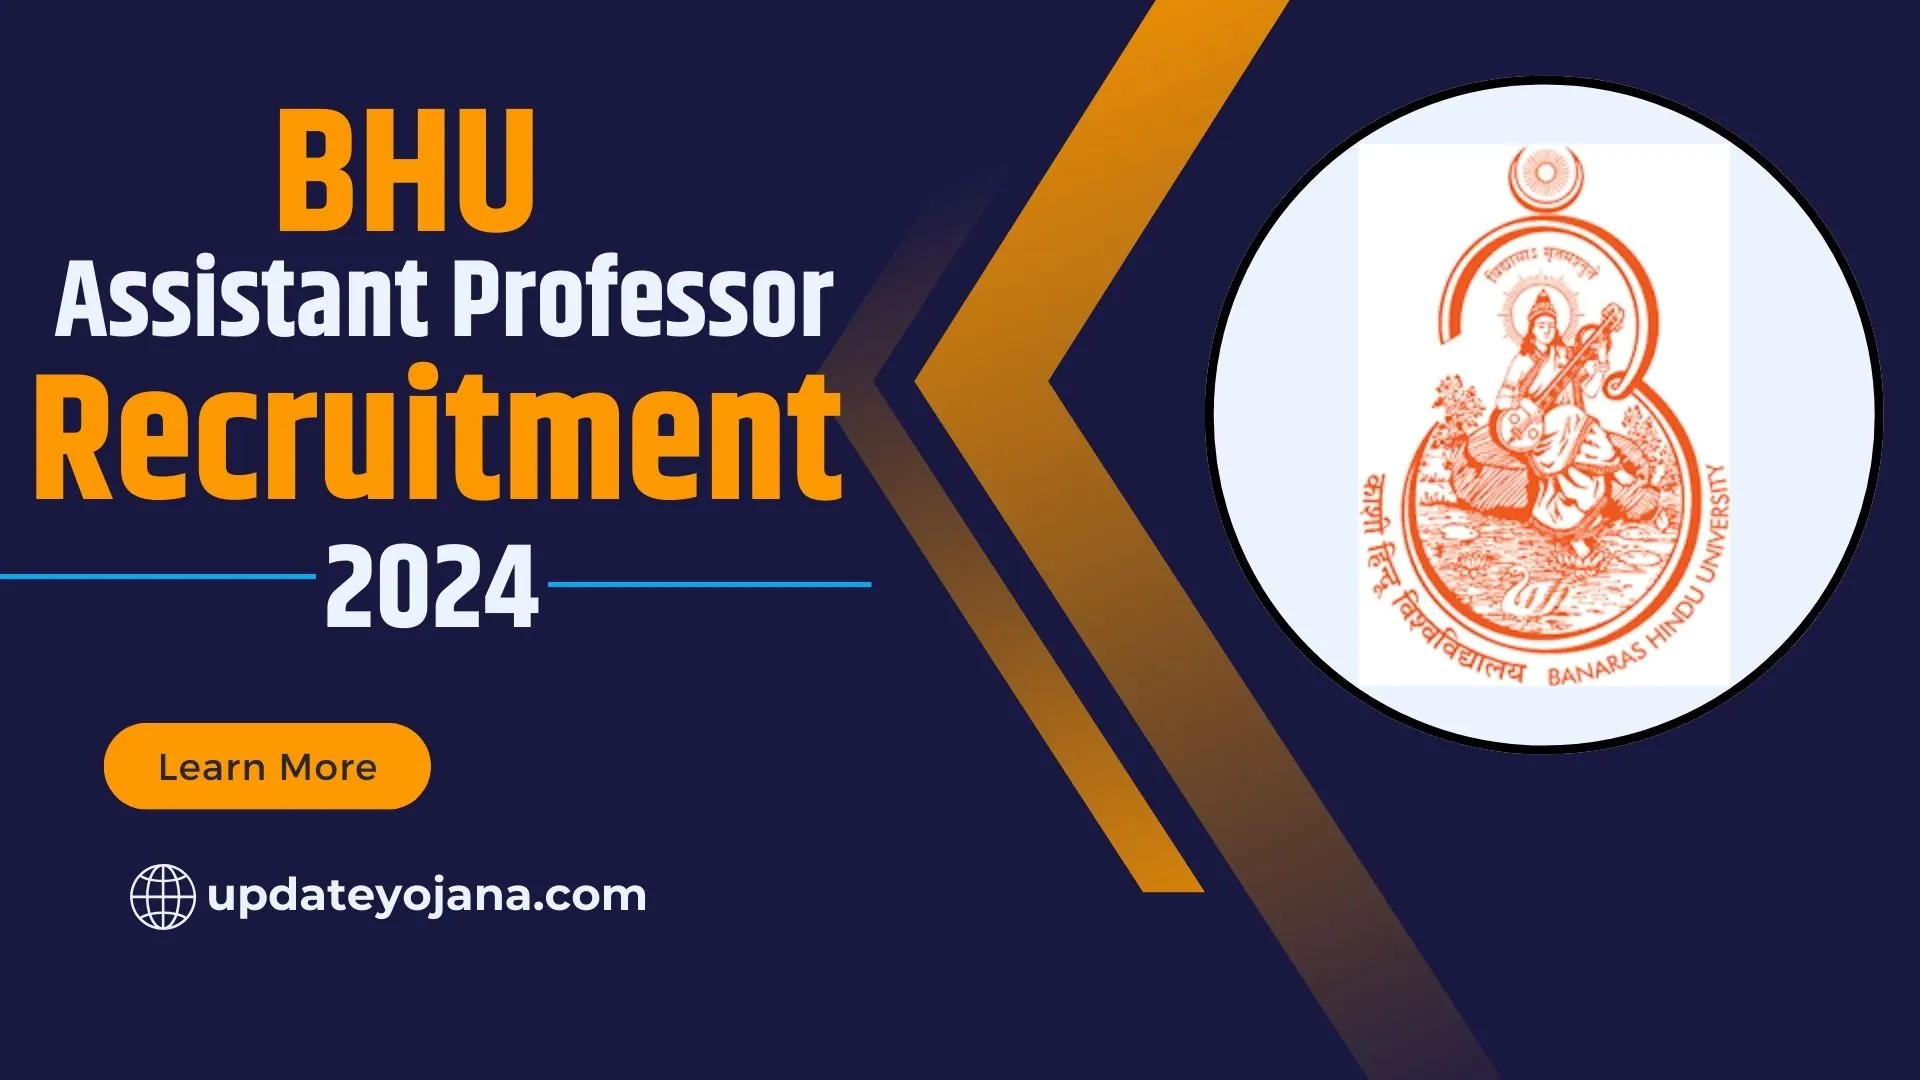 BHU Assistant Professor Recruitment 2024.webp